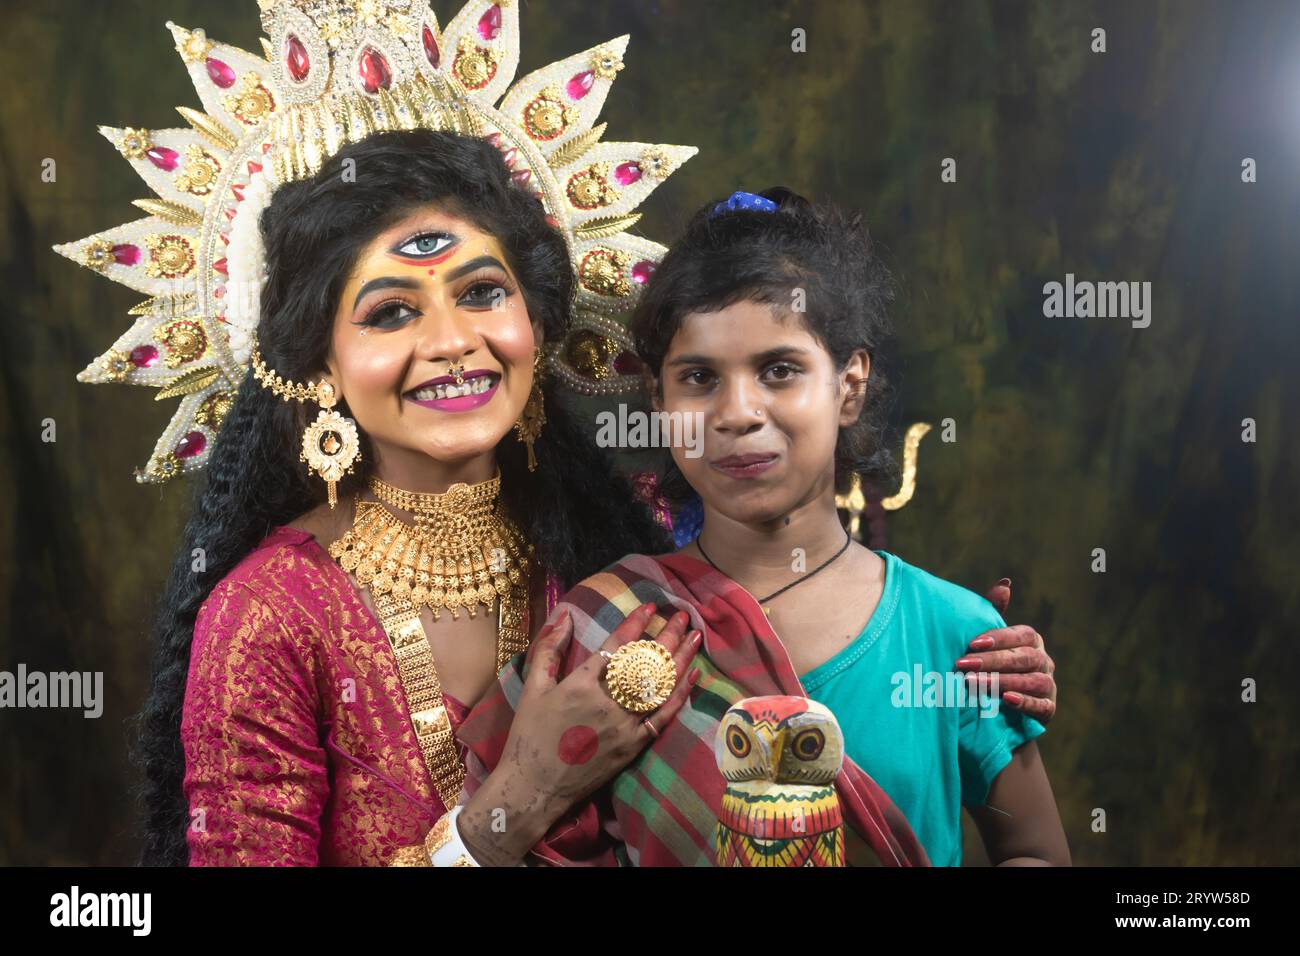 A Concept Agomoni  photoshoot  for Unloved underprivileged children. Maa Durga agomoni shoot concept.Indian culture durga puja.. Stock Photo